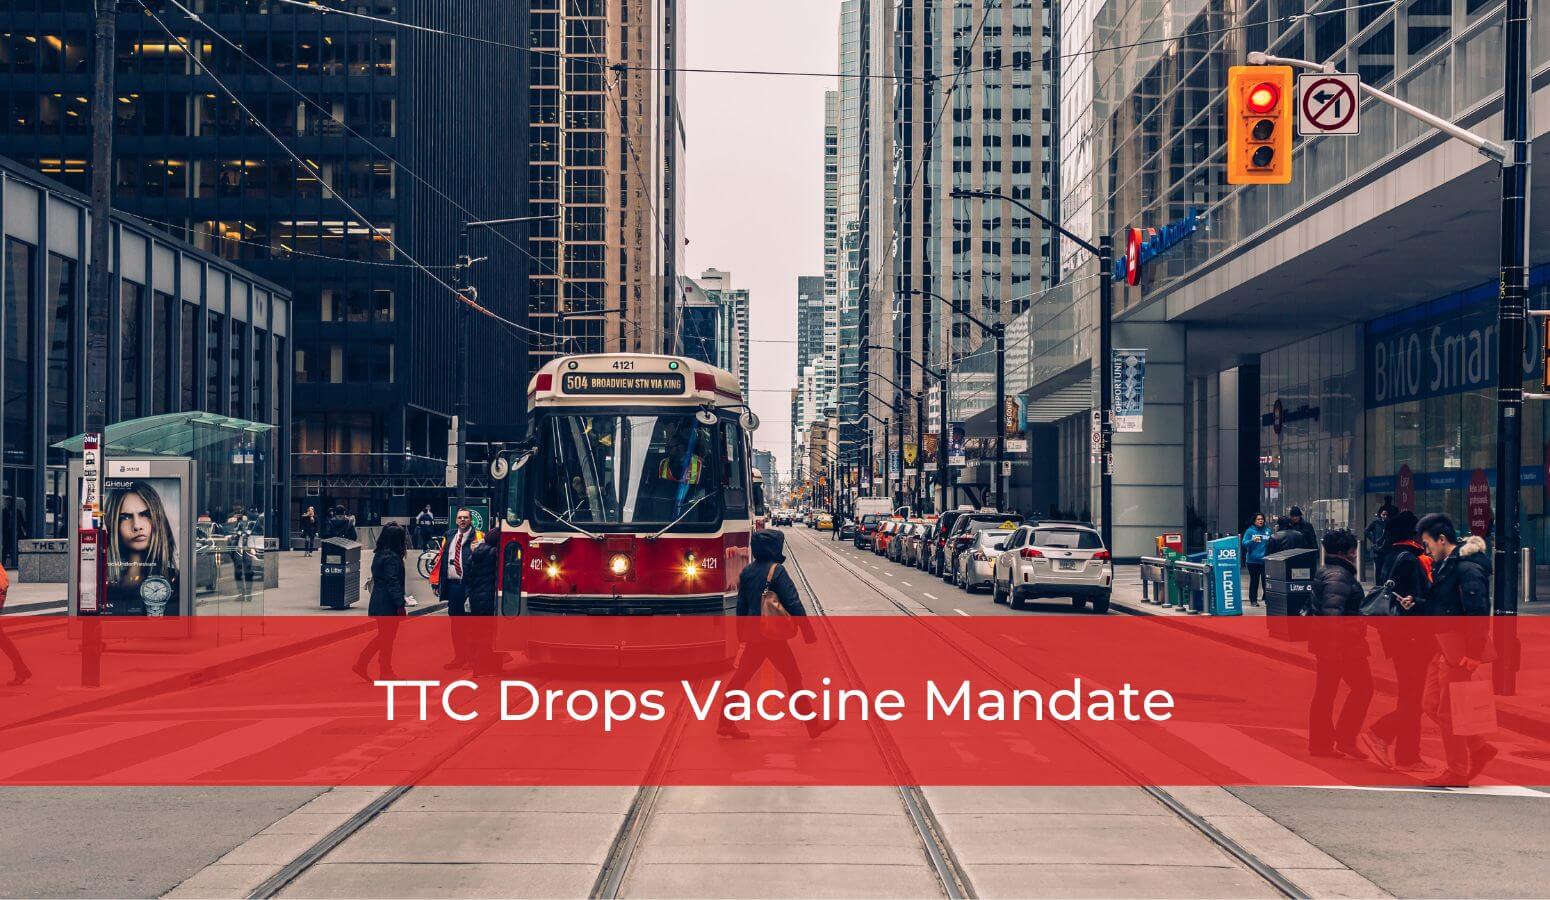 Featured image for “TTC Drops Vaccine Mandate”